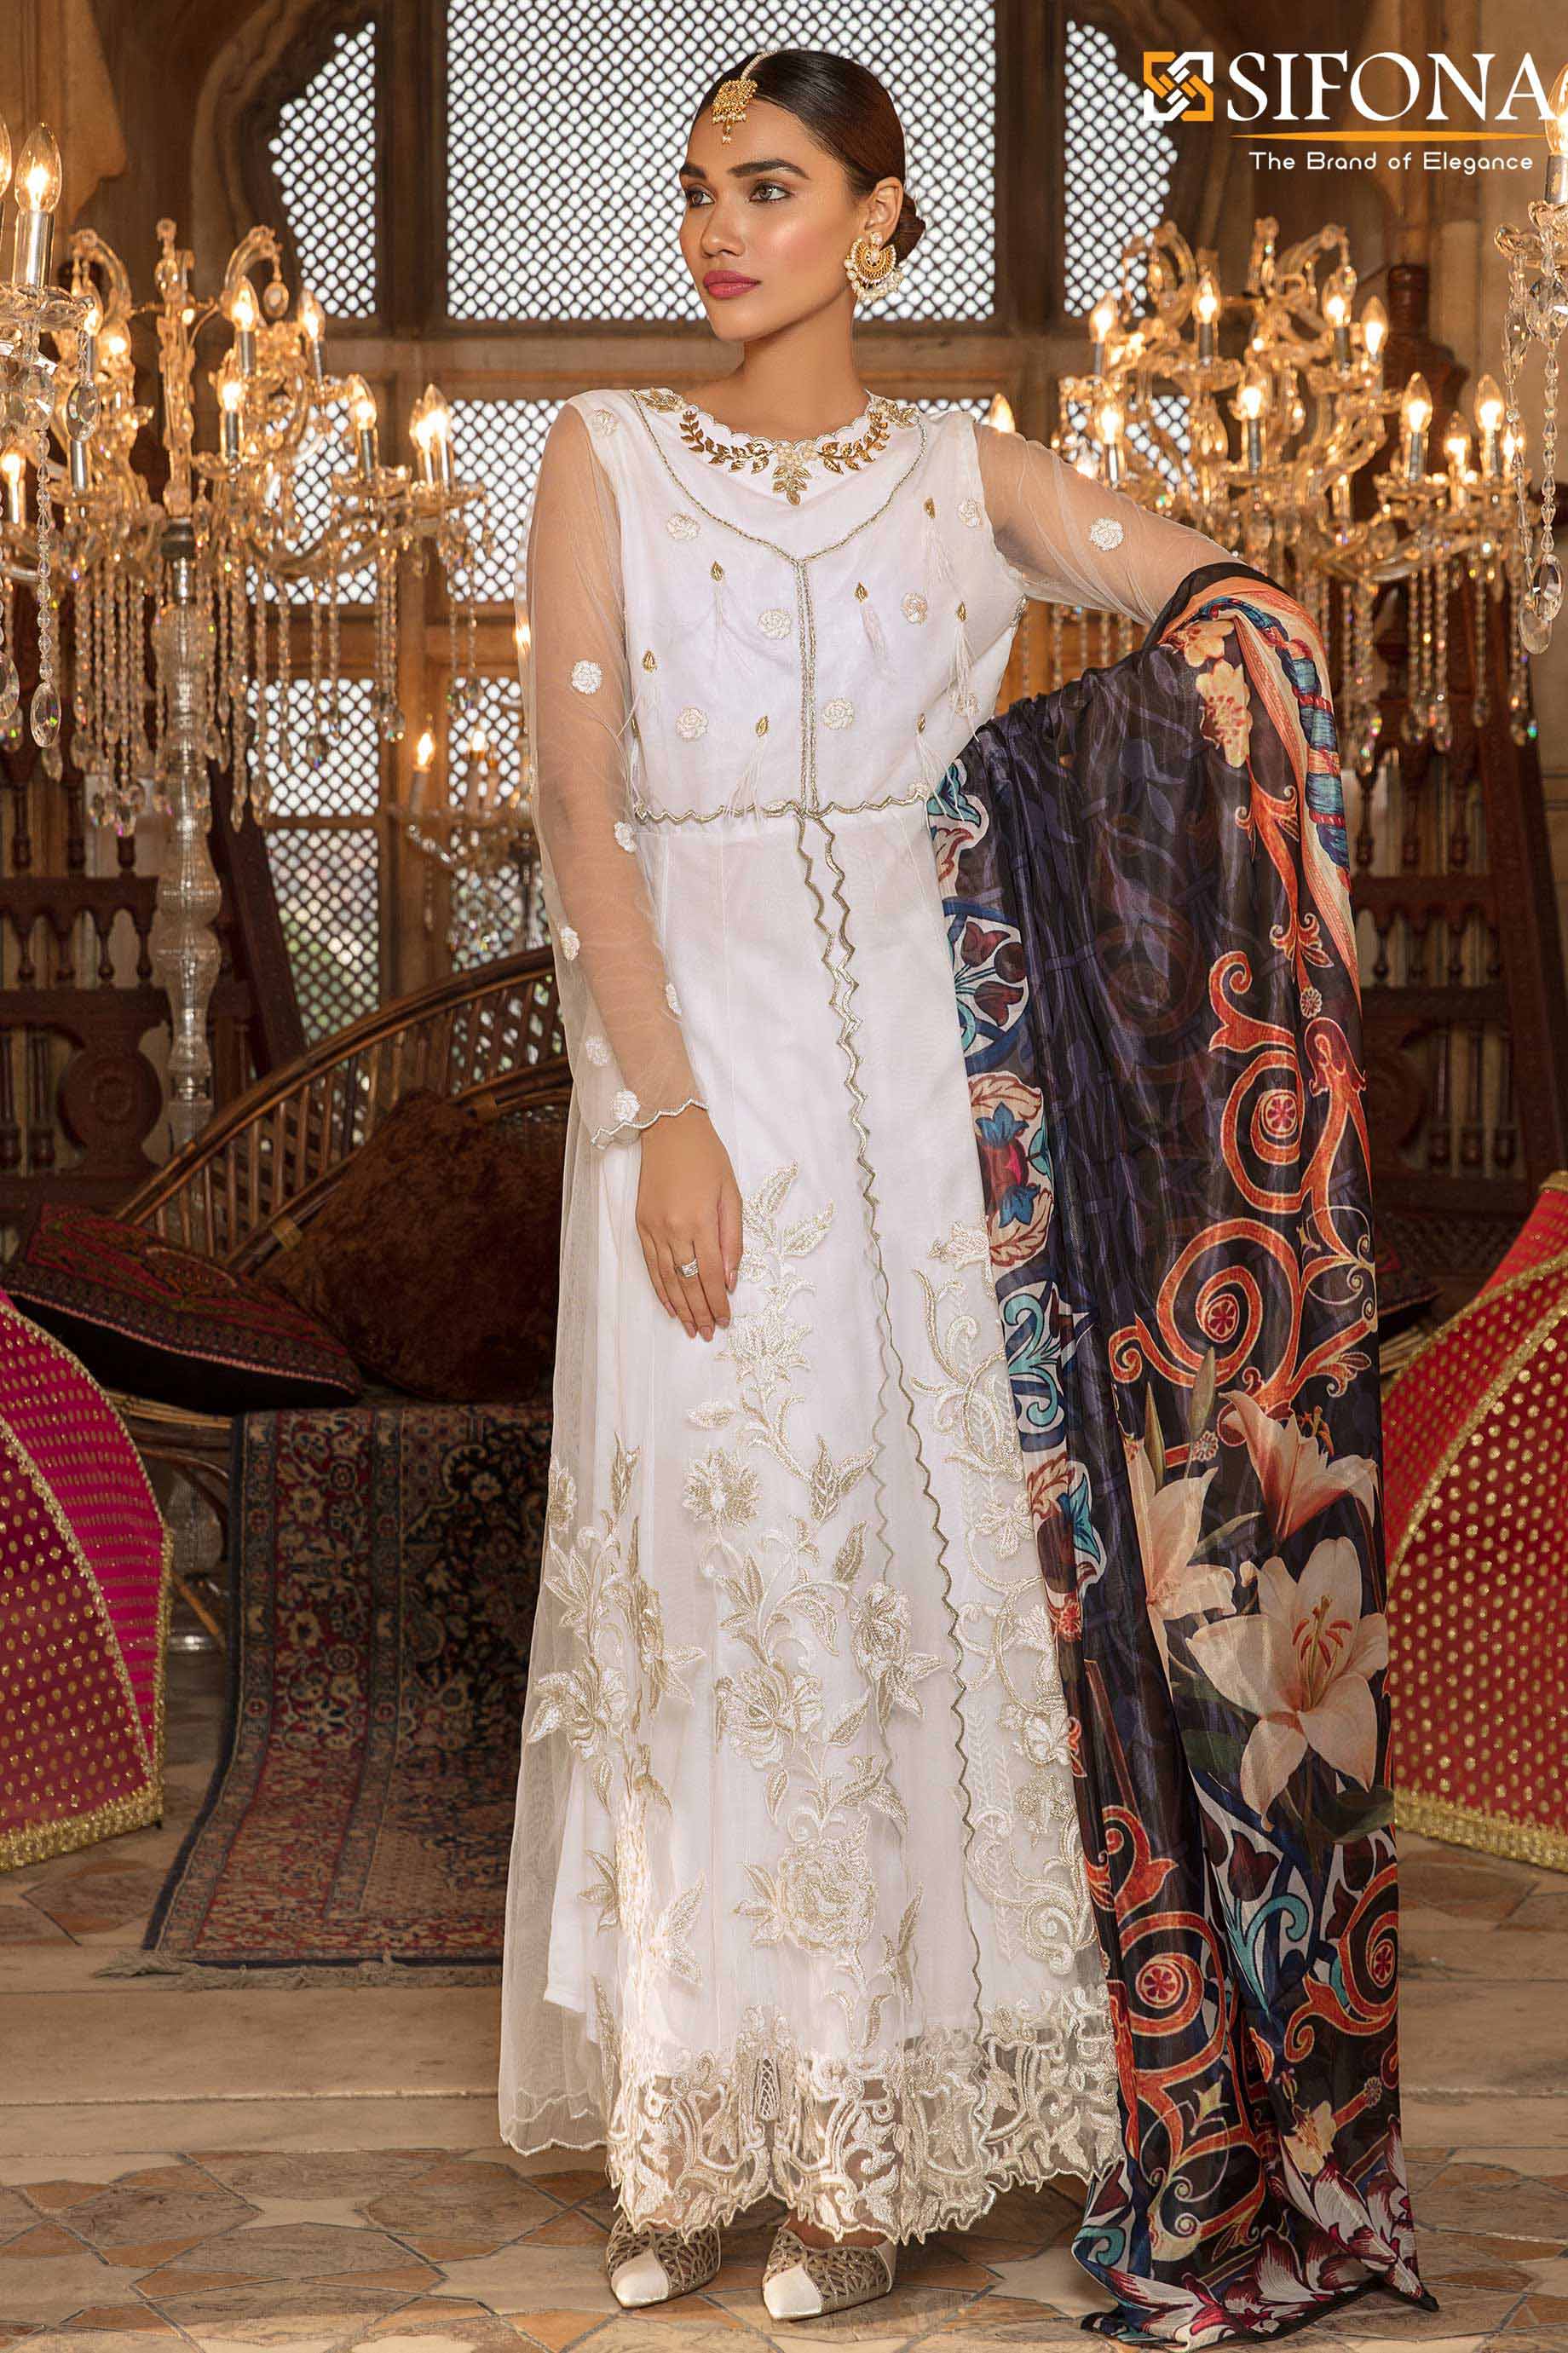 This beautiful Pakistani semi formal dress by Sifona in net